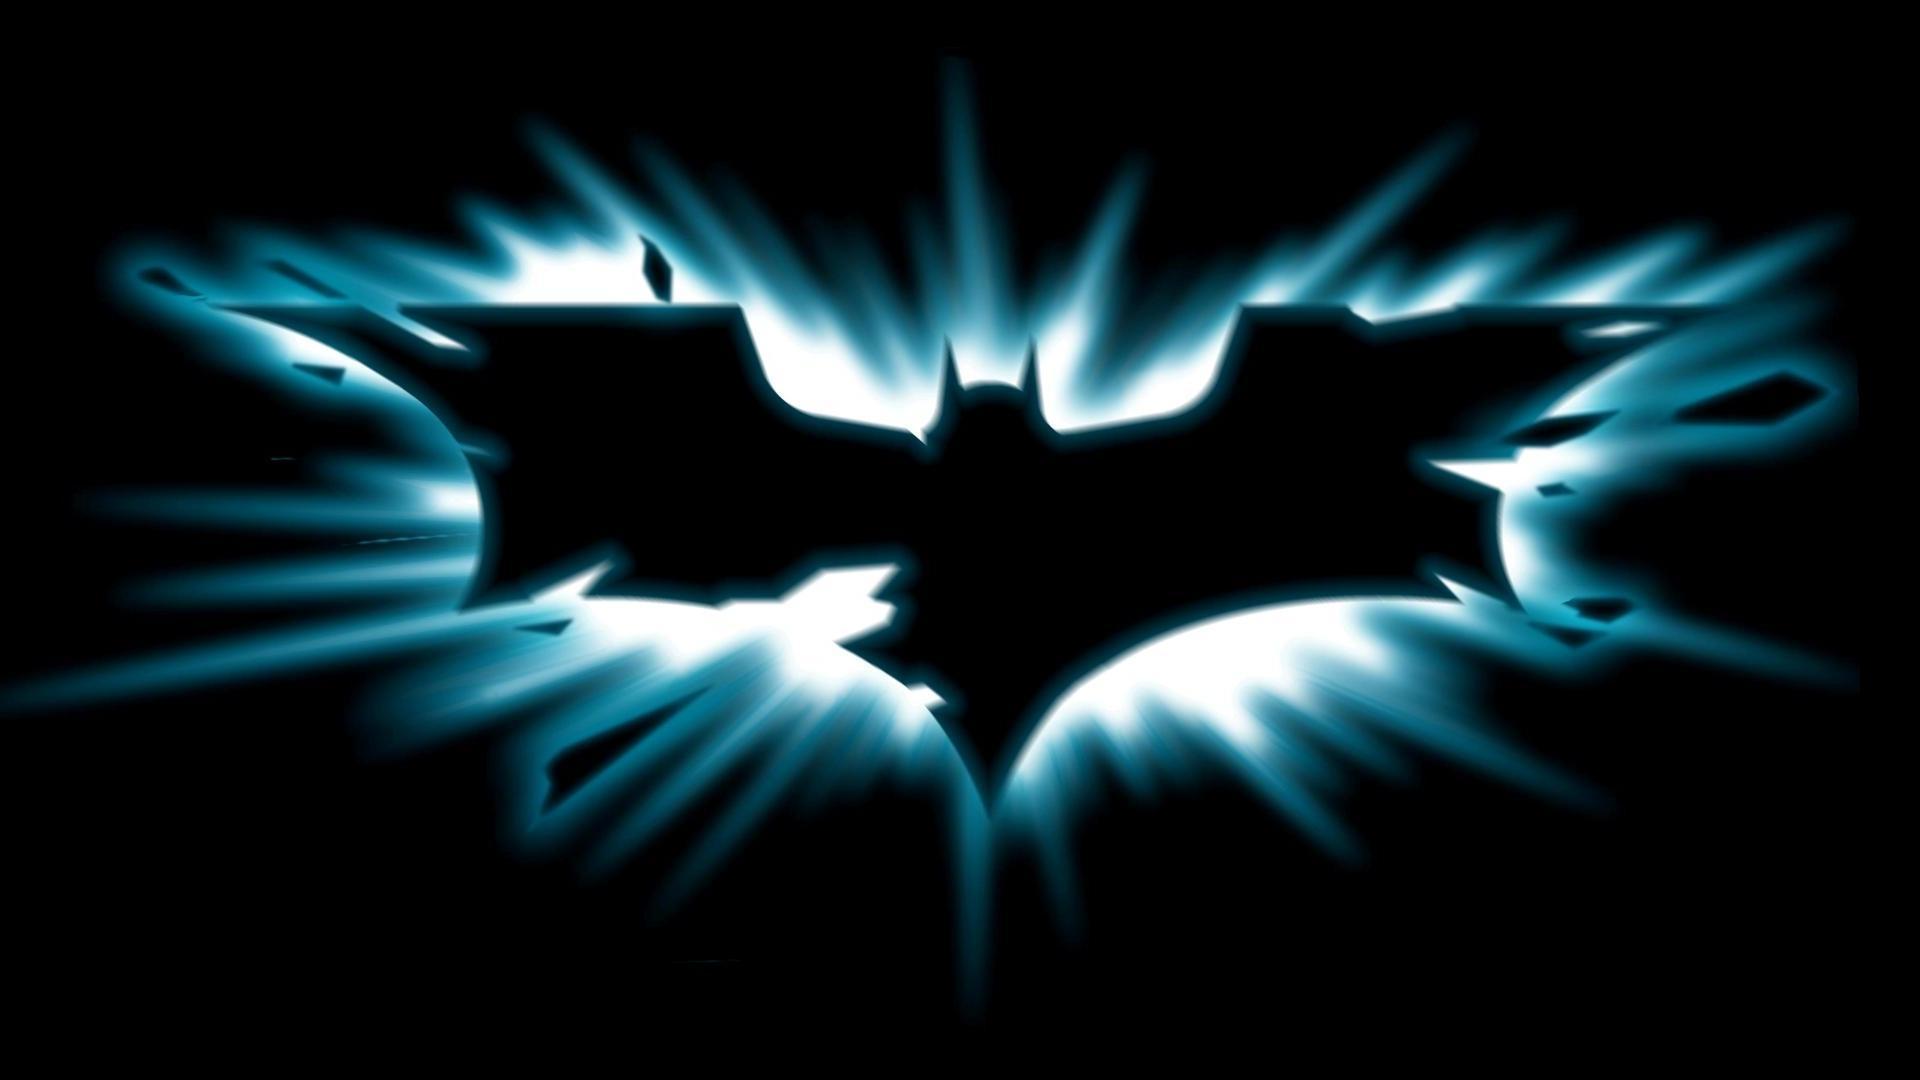 50 Batman Logo wallpapers For Download HD 1080p 1920x1080